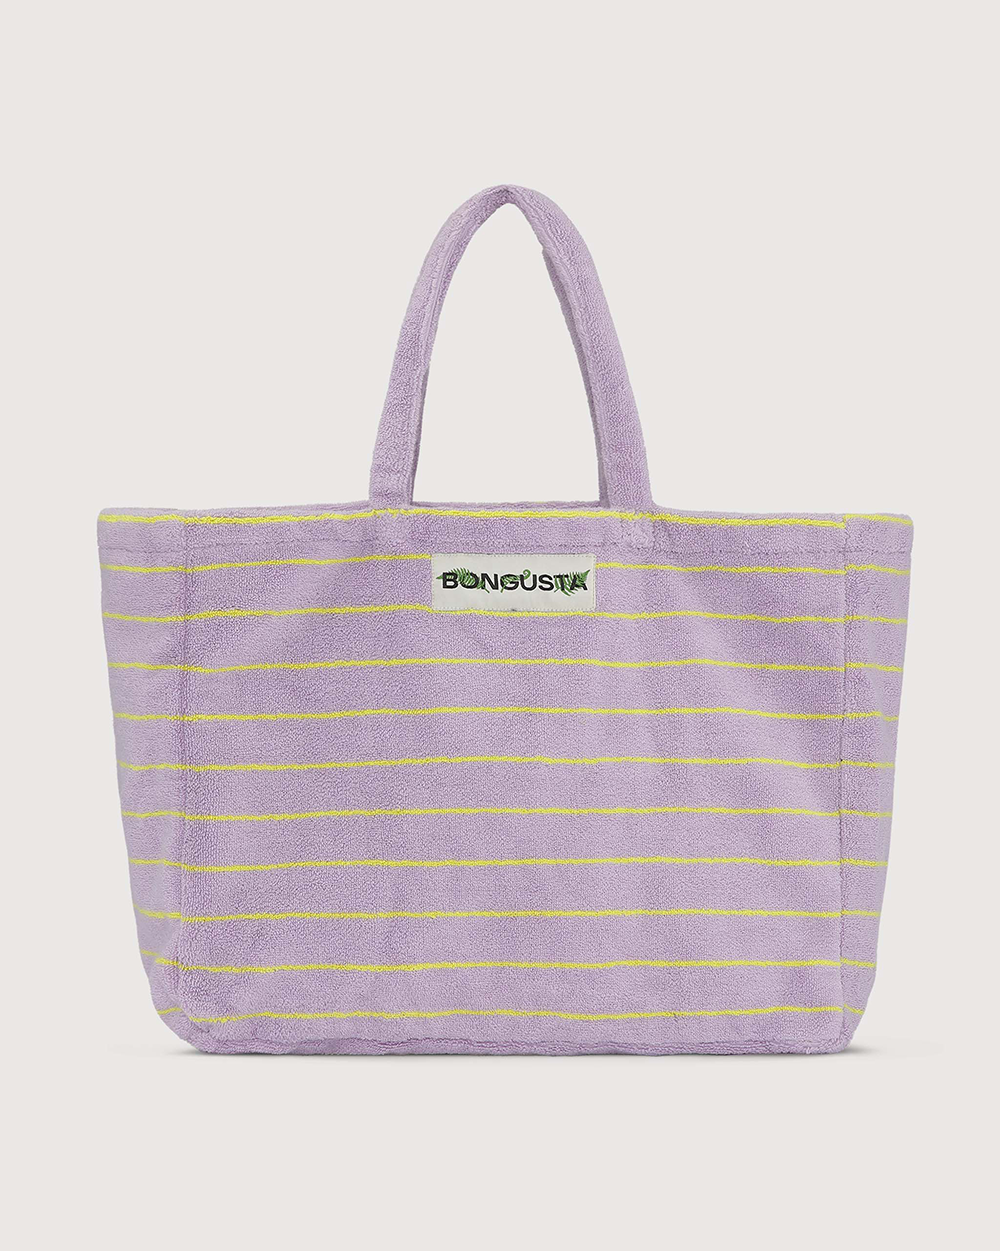 (Bongusta) Naram Weekend bag - Lilac & Neon yellow